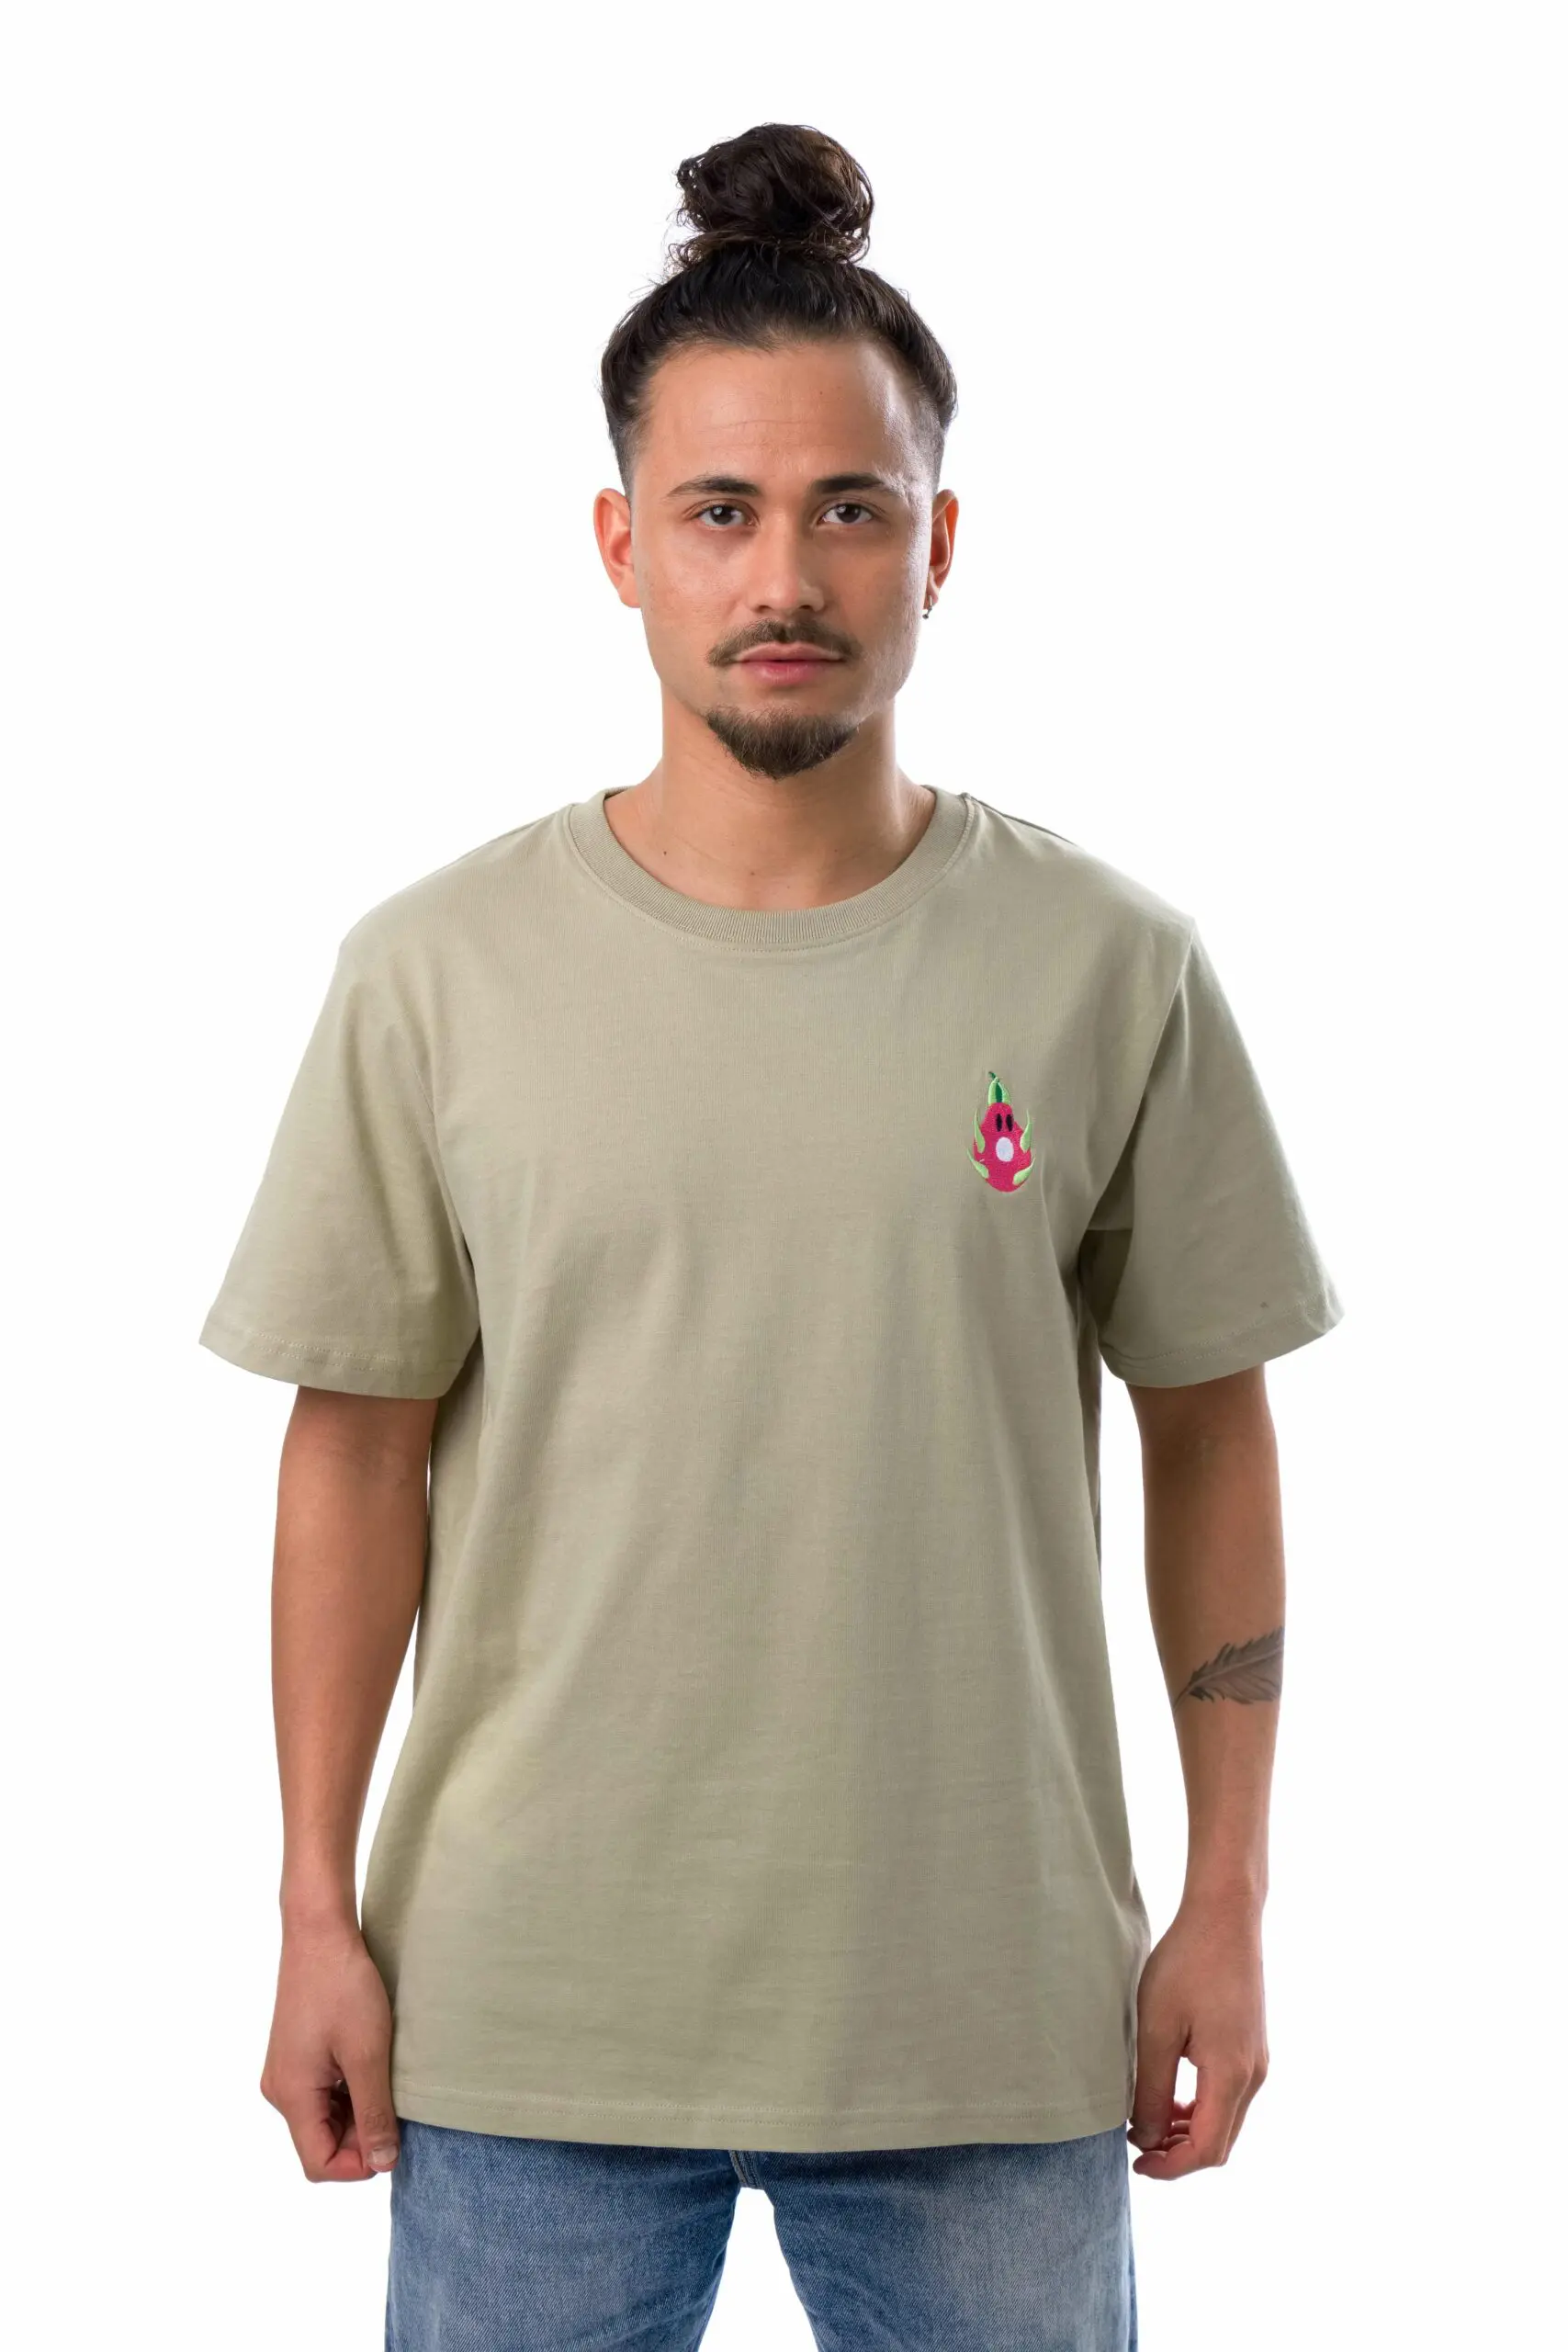 T-Shirt Buah Naga Green 1